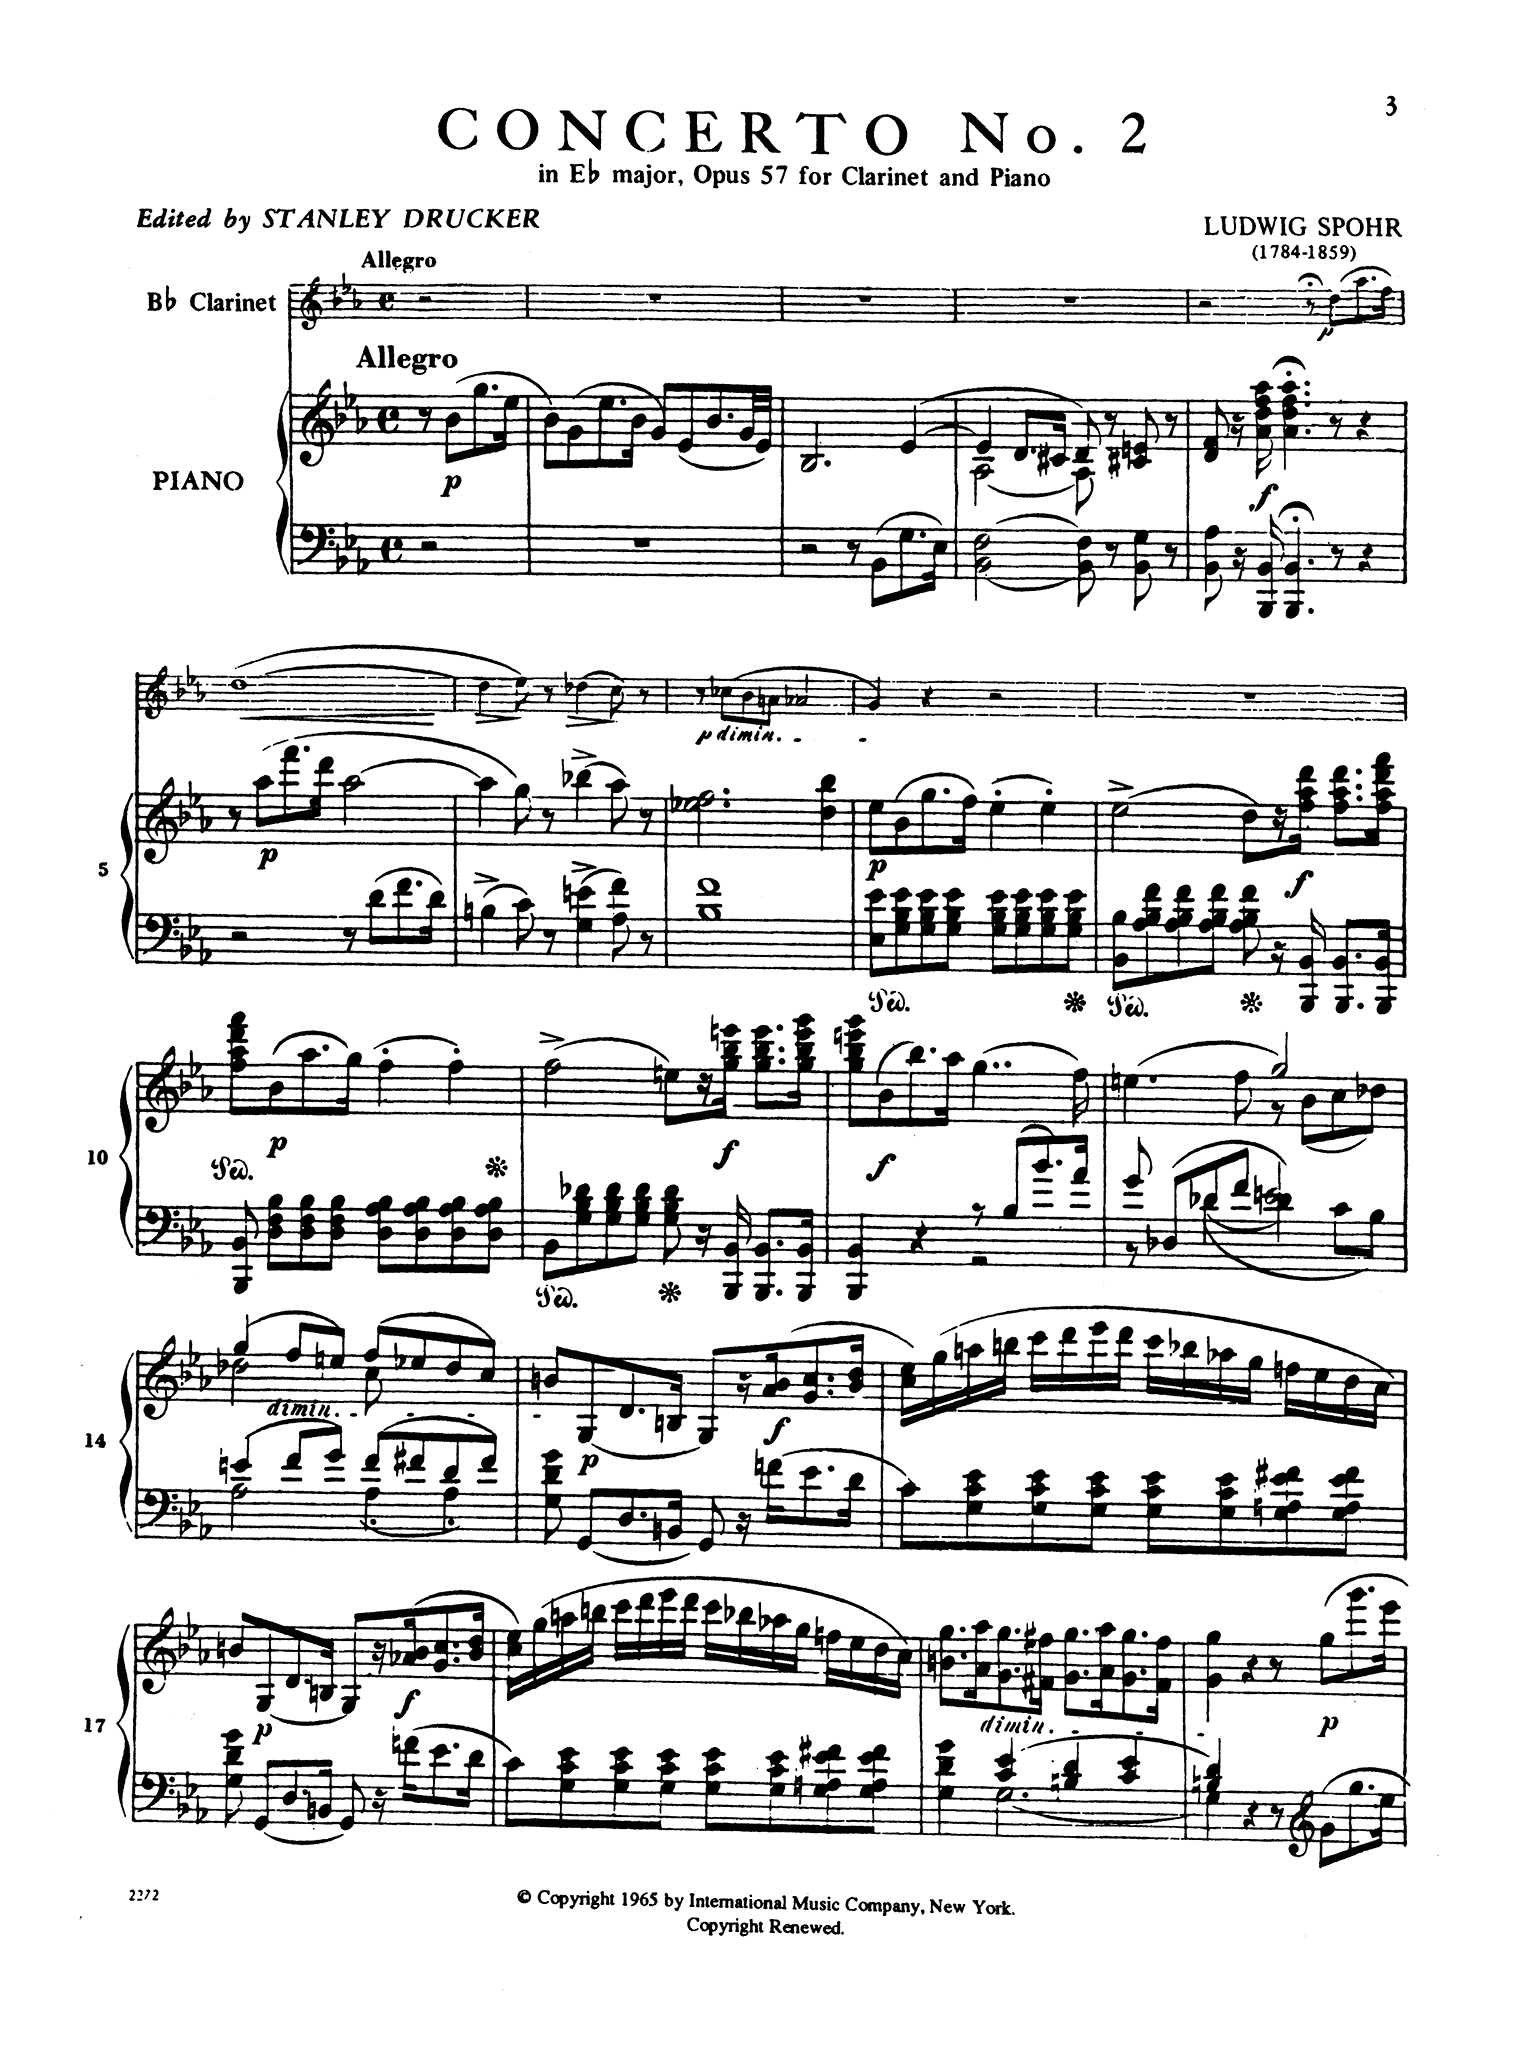 Clarinet Concerto No. 2 in E-flat Major, Op. 57 - Movement 1